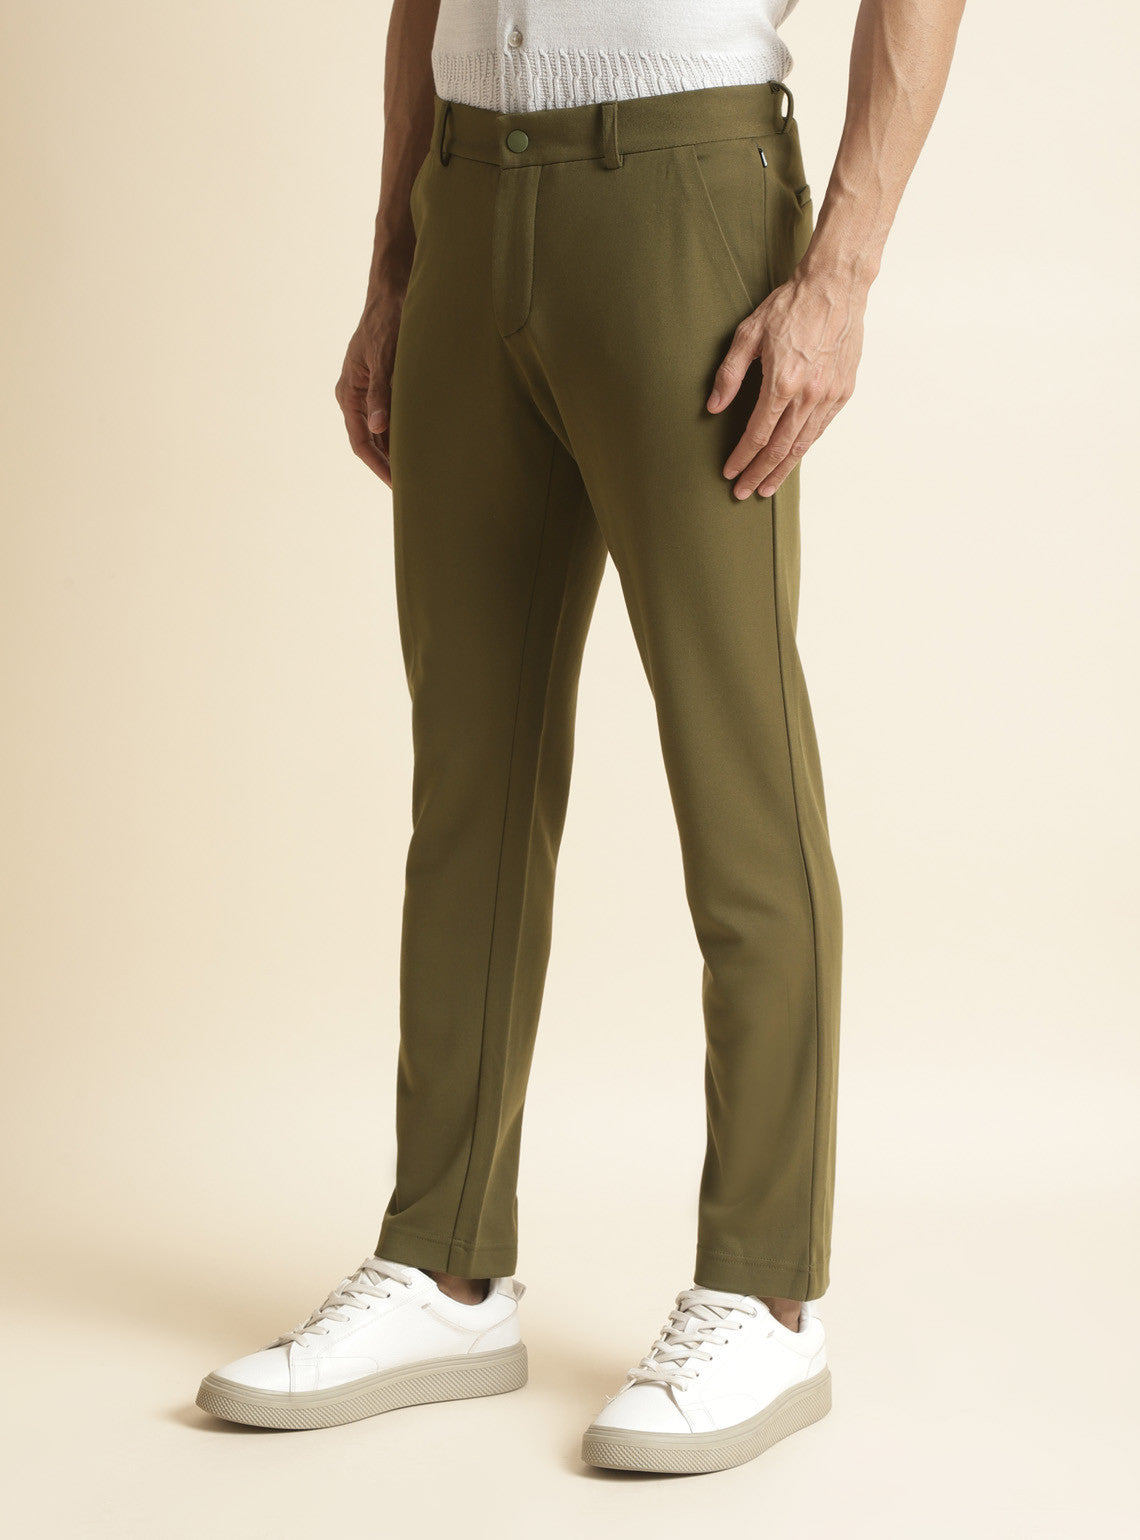 Buy The Souled Store Men Original Solid Light Olive Cargo Pants online